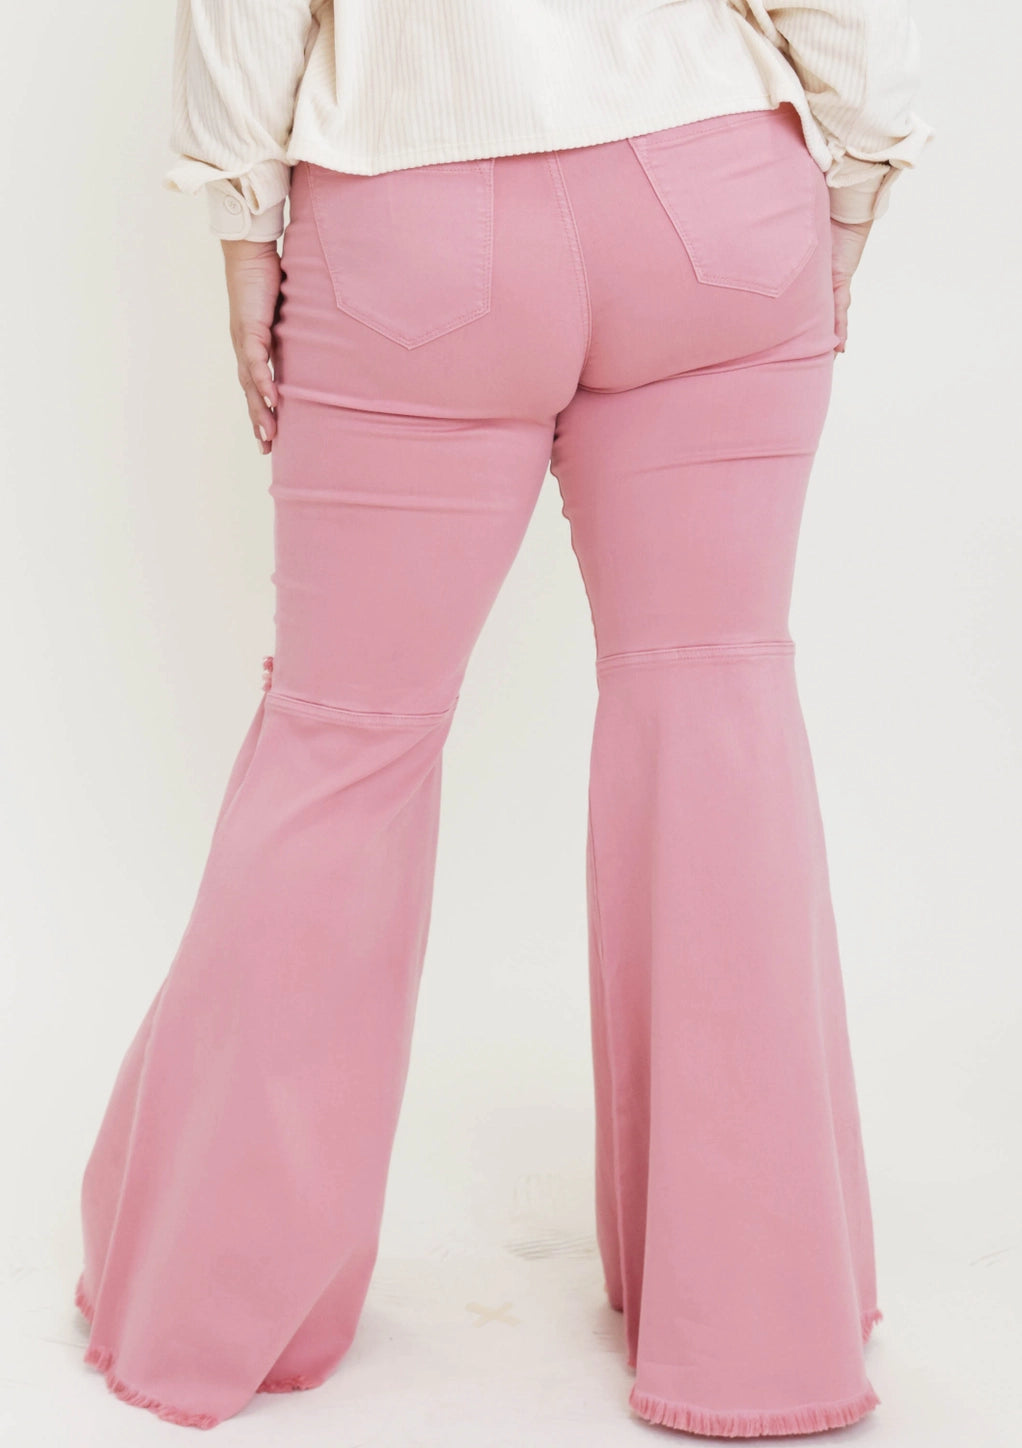 Plus Size: Julie Pink Flare Jeans